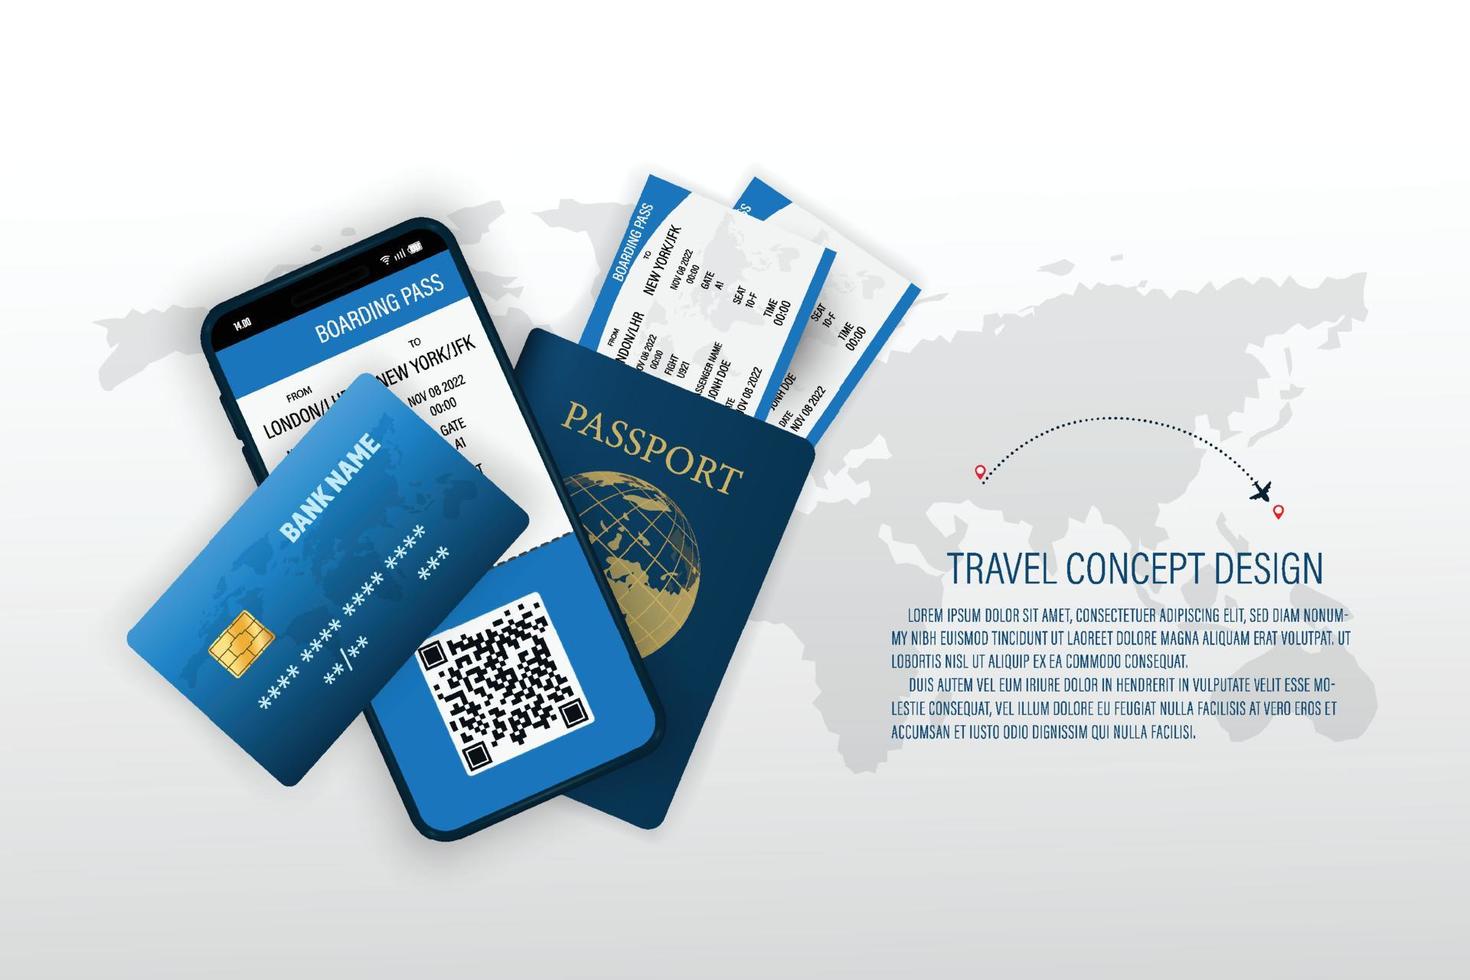 Vektorreise Urlaub. Bordkarte Flugticket, Reisepass, Smartphone und Kreditkarte. vektor